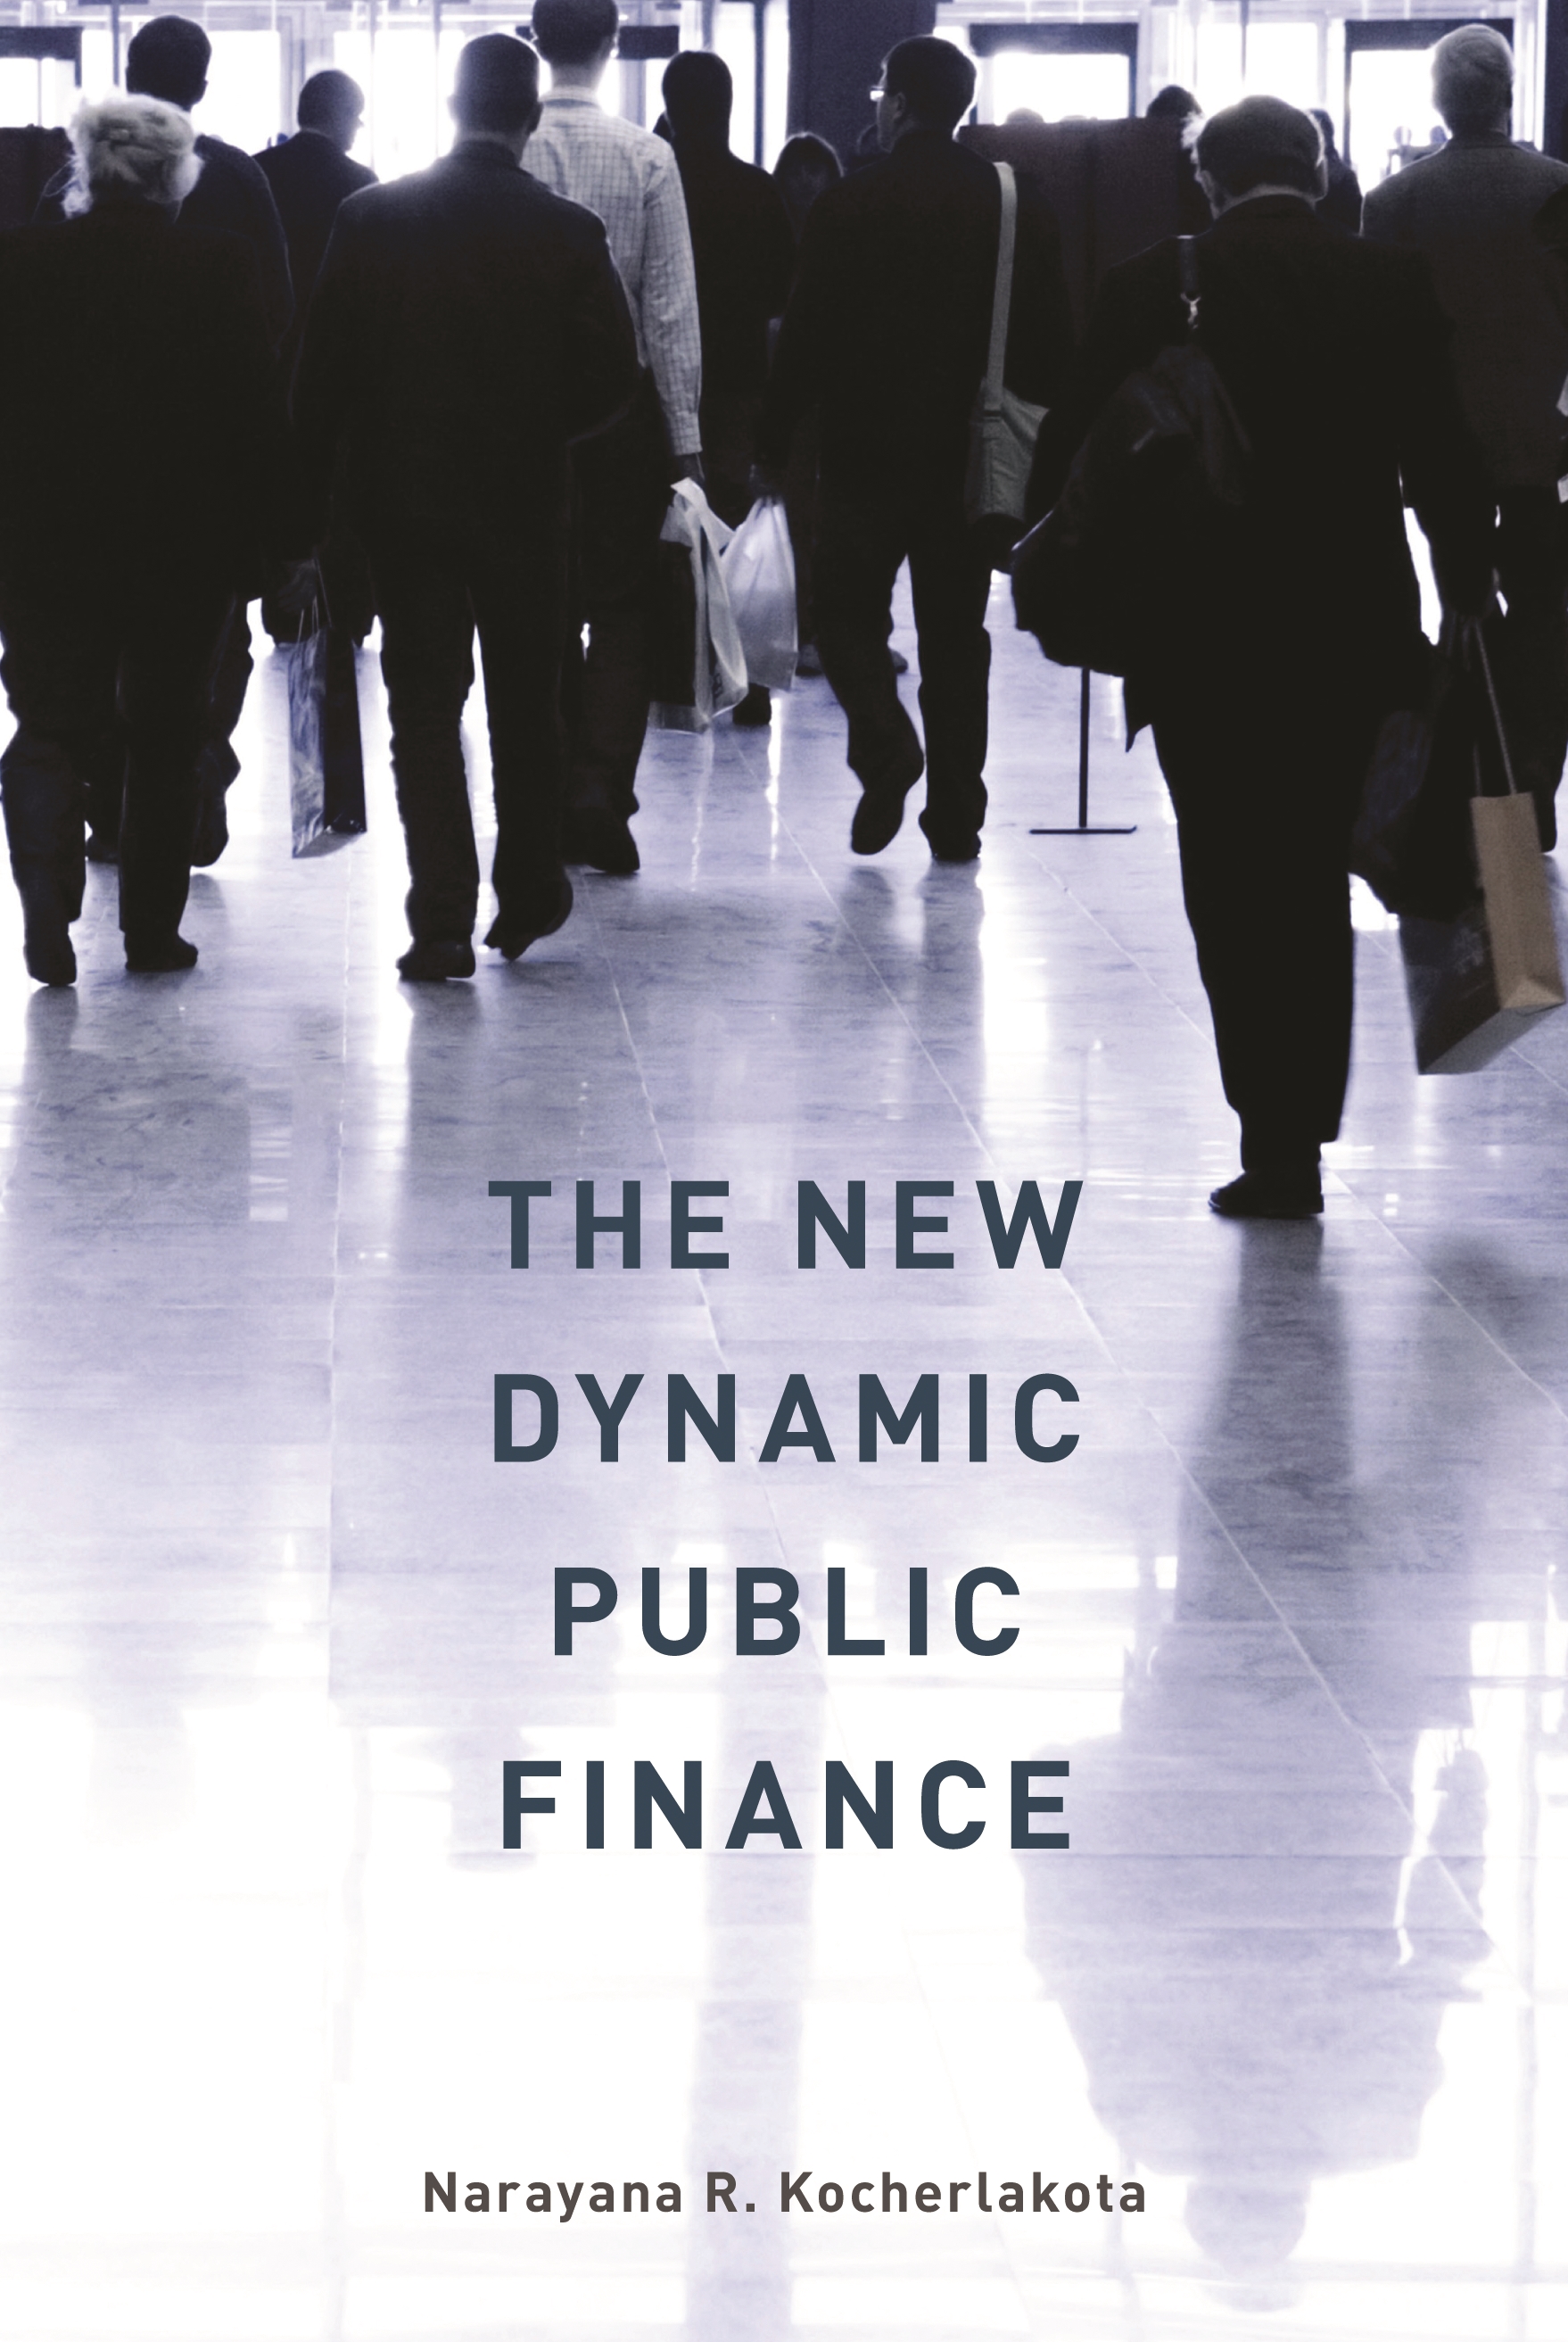 The New public Finance.